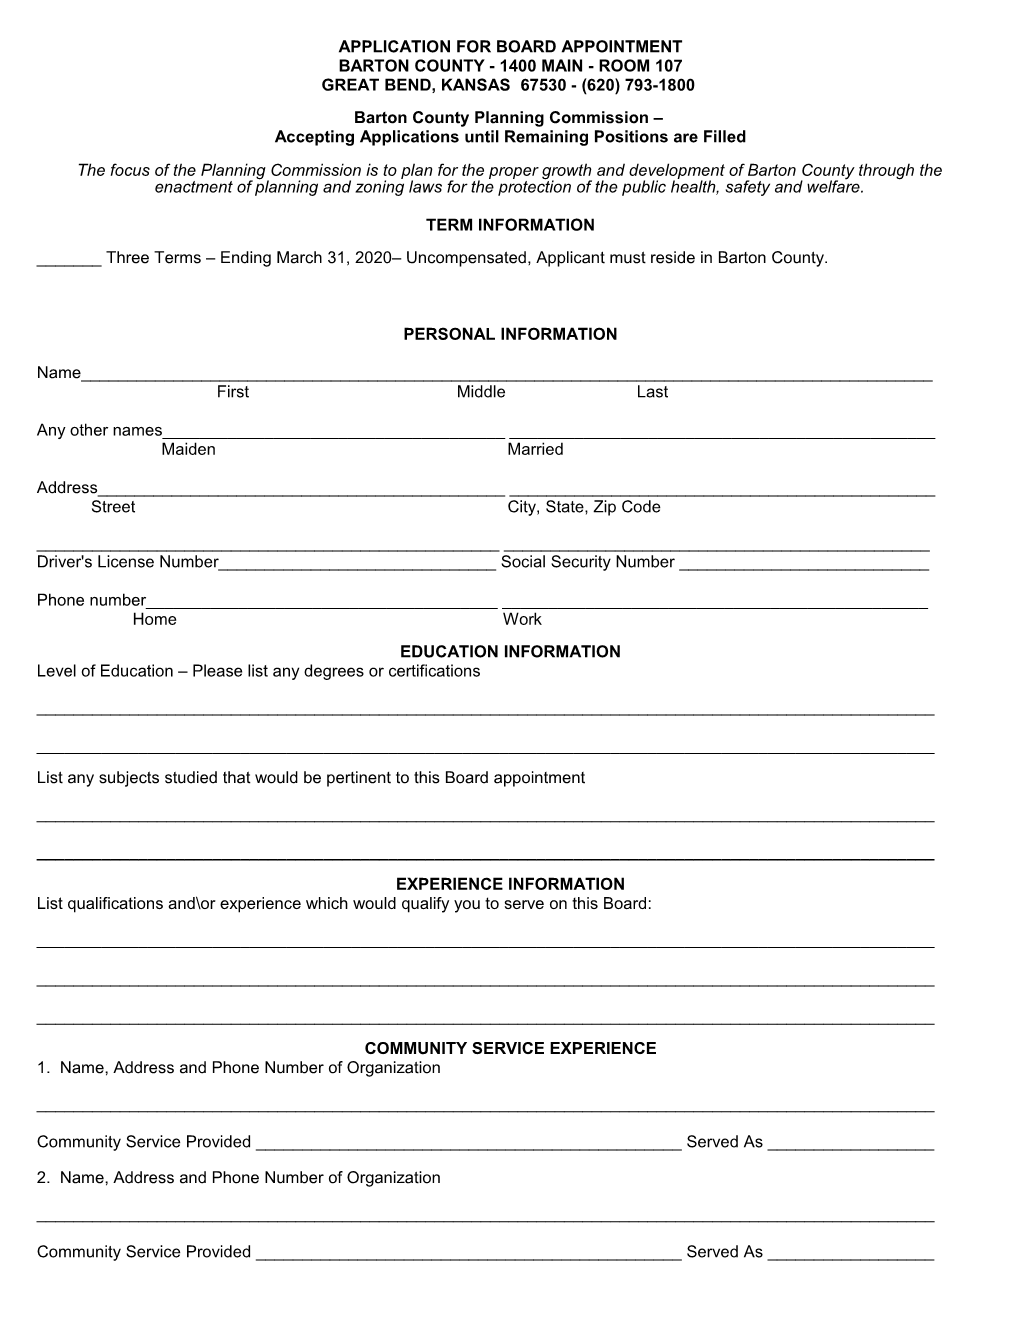 Barton County Employment Application